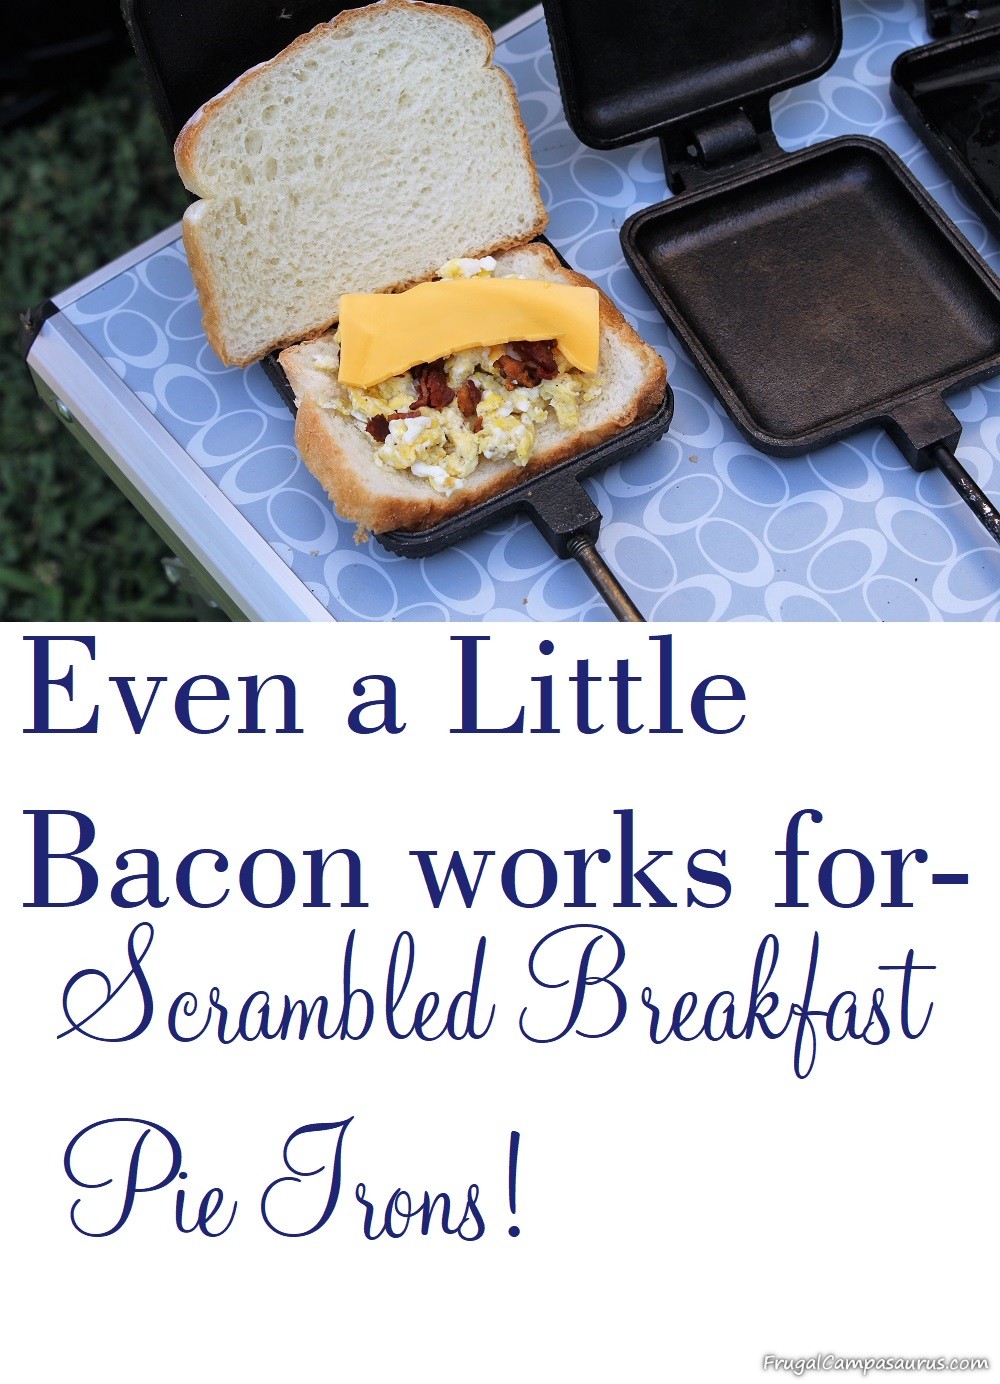 Hobo Eggs and Sausage Breakfast Sandwich Pie Iron Recipe